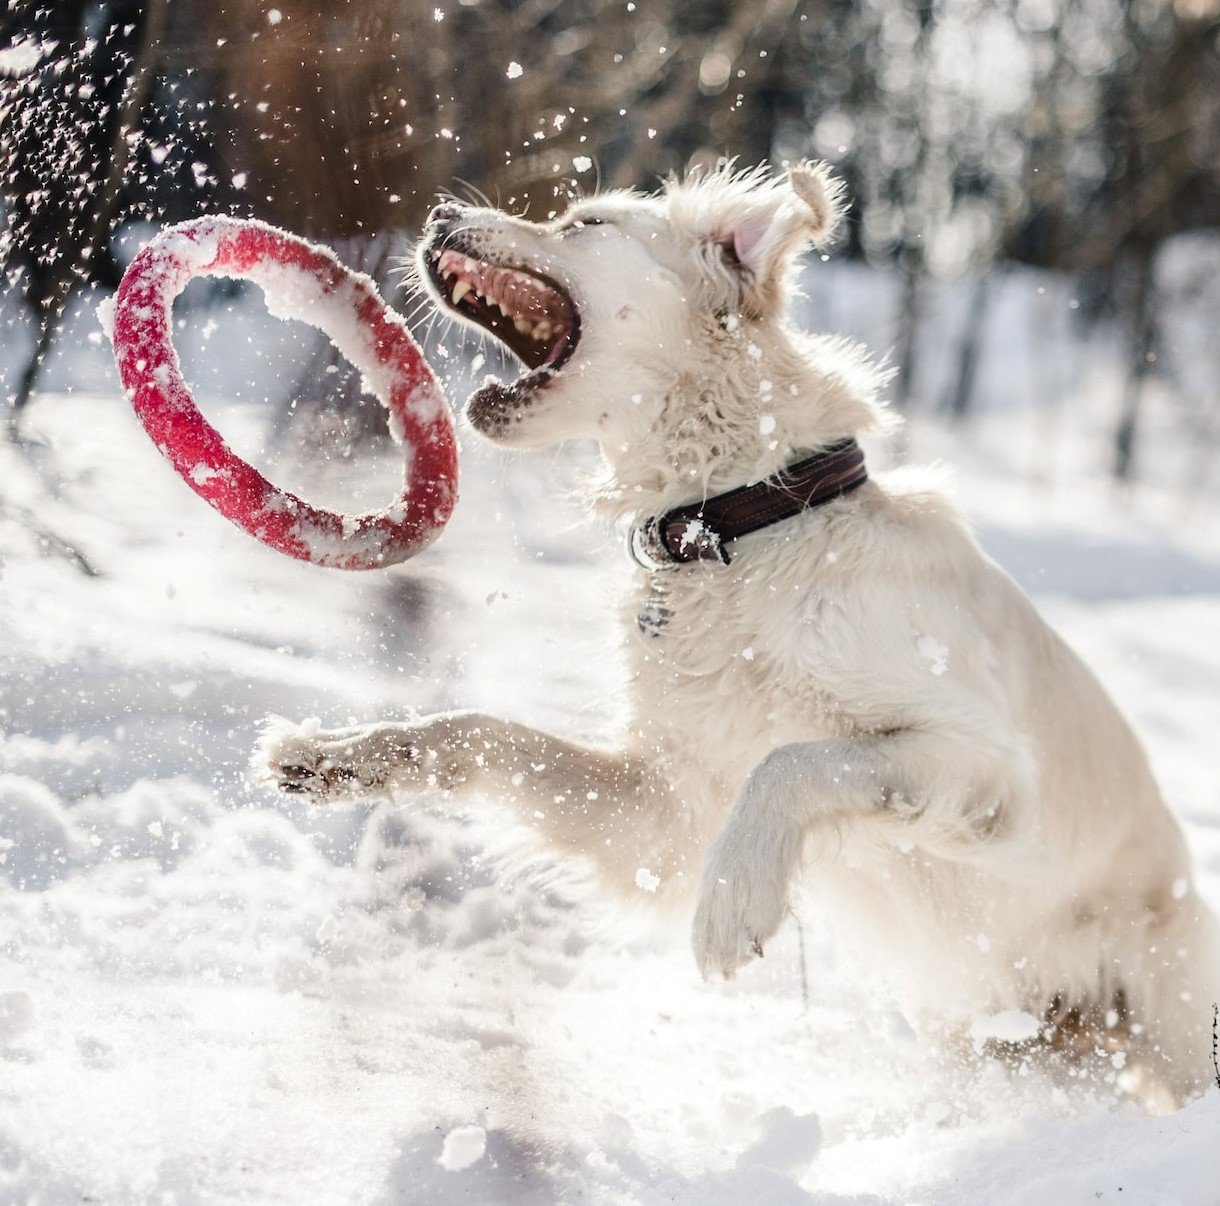 Snow dog with frisbee.jpg